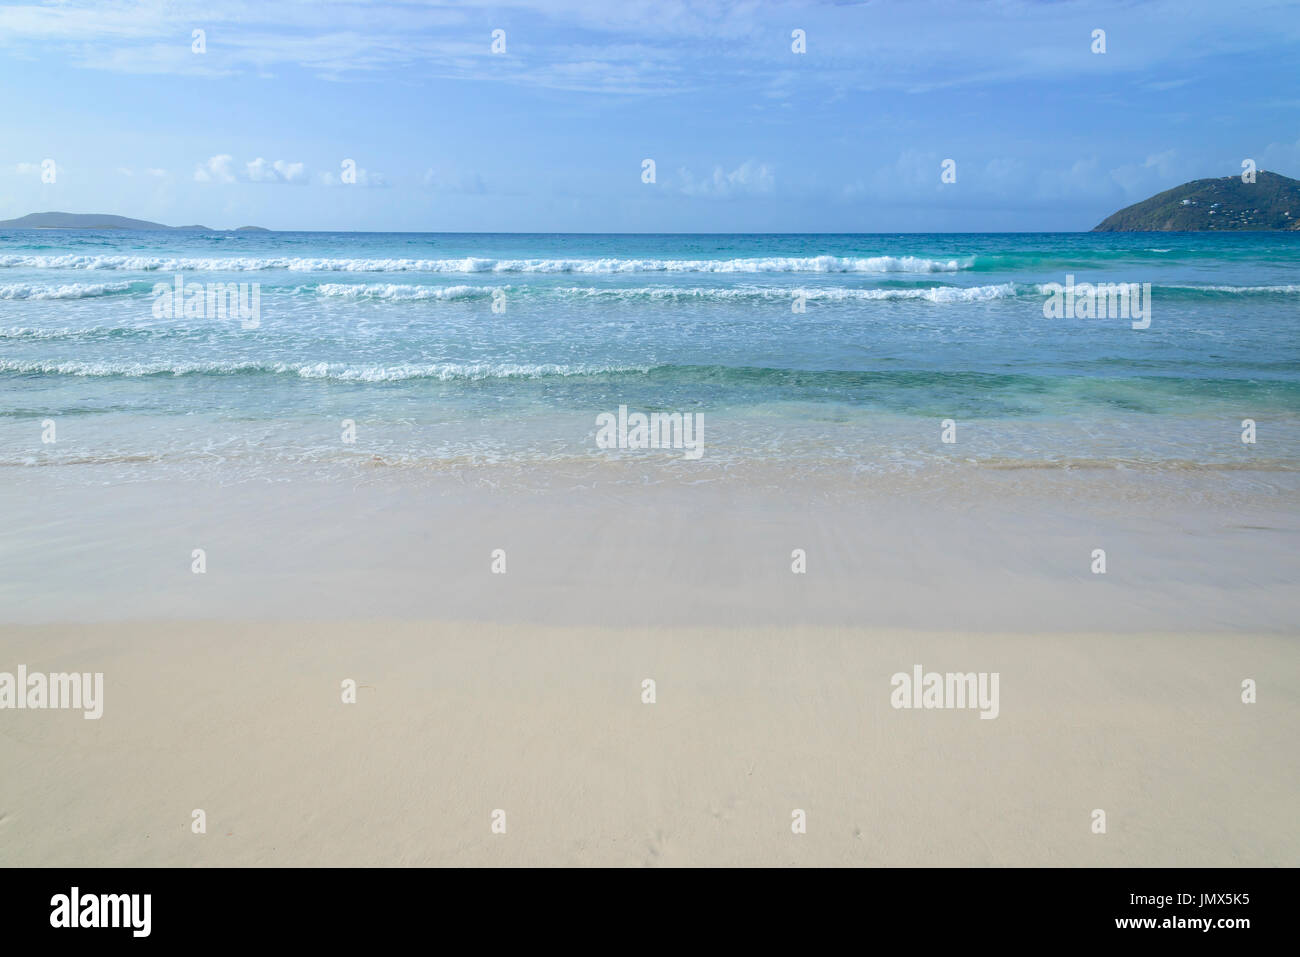 Sandy Beach and waves, Tortola Island, British Virgin Islands, Caribbean Sea Stock Photo